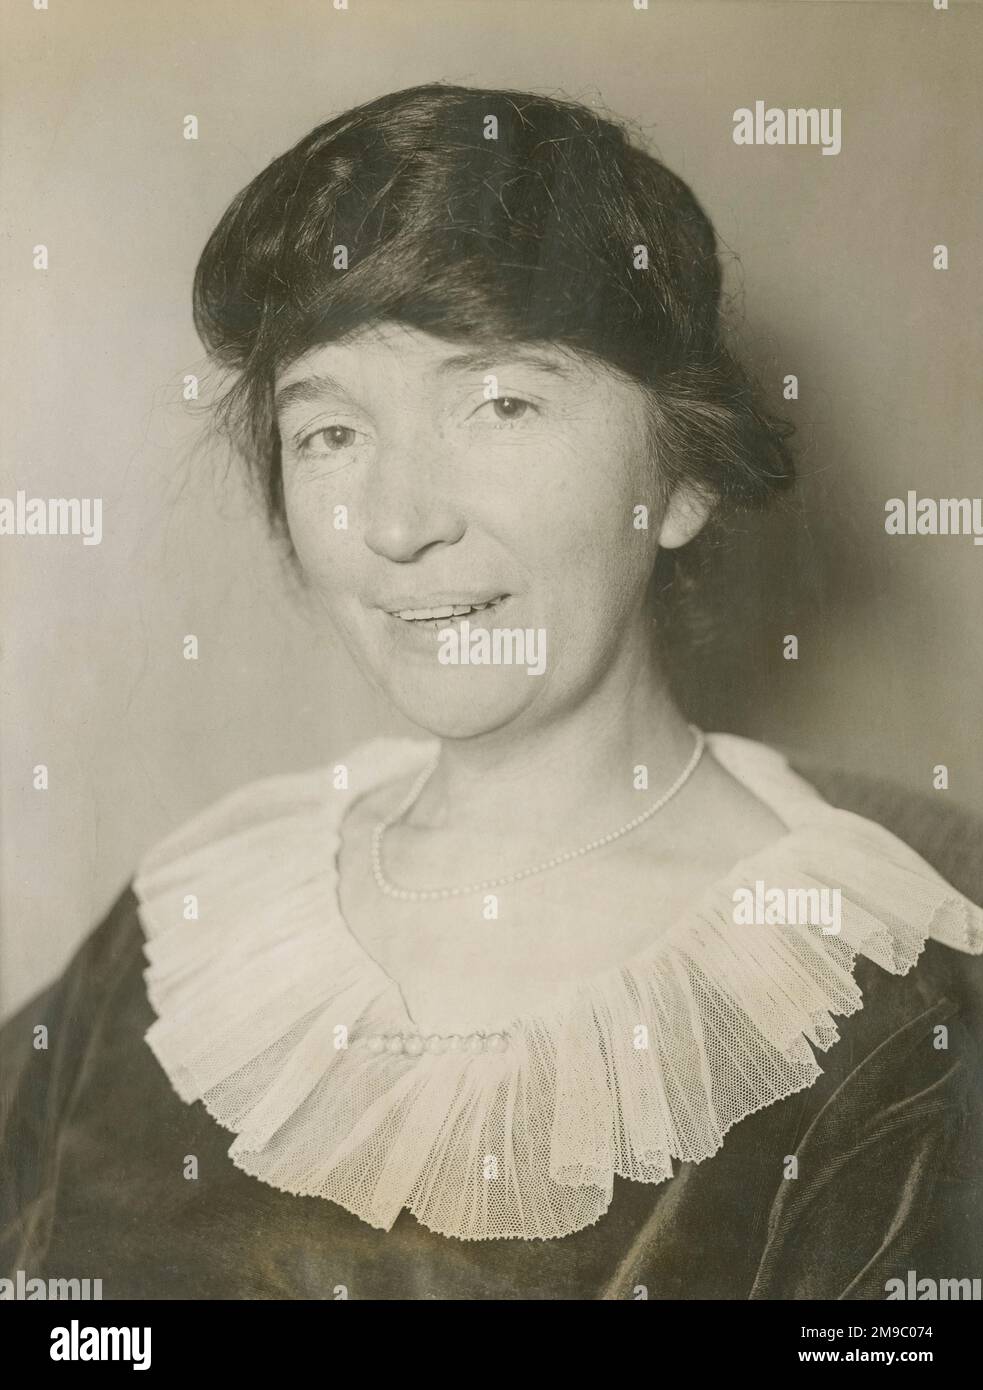 Antique 1925 photograph, portrait of Margaret Sanger. Margaret Higgins Sanger (1879-1966), was an American birth control activist, sex educator, writer, and nurse. SOURCE: ORIGINAL PHOTOGRAPH Stock Photo